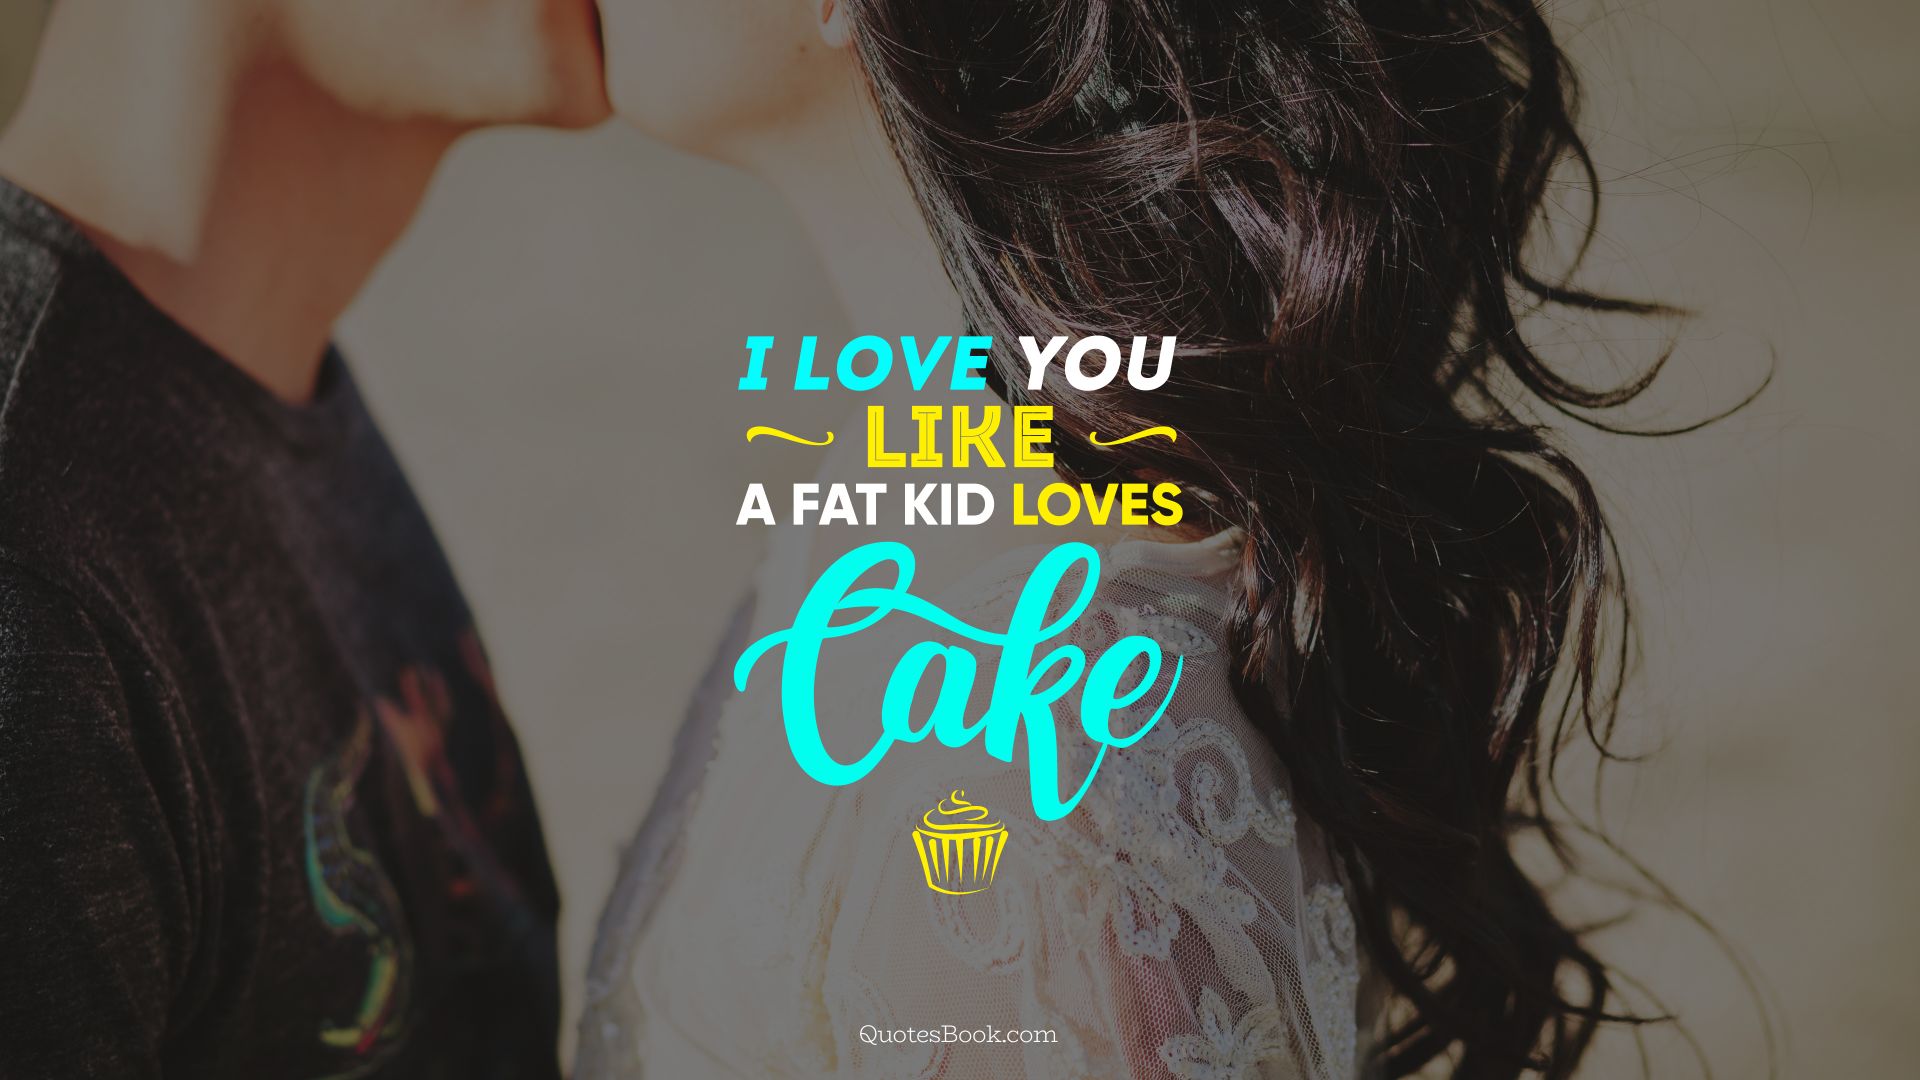 I love you like a fat kid loves cake